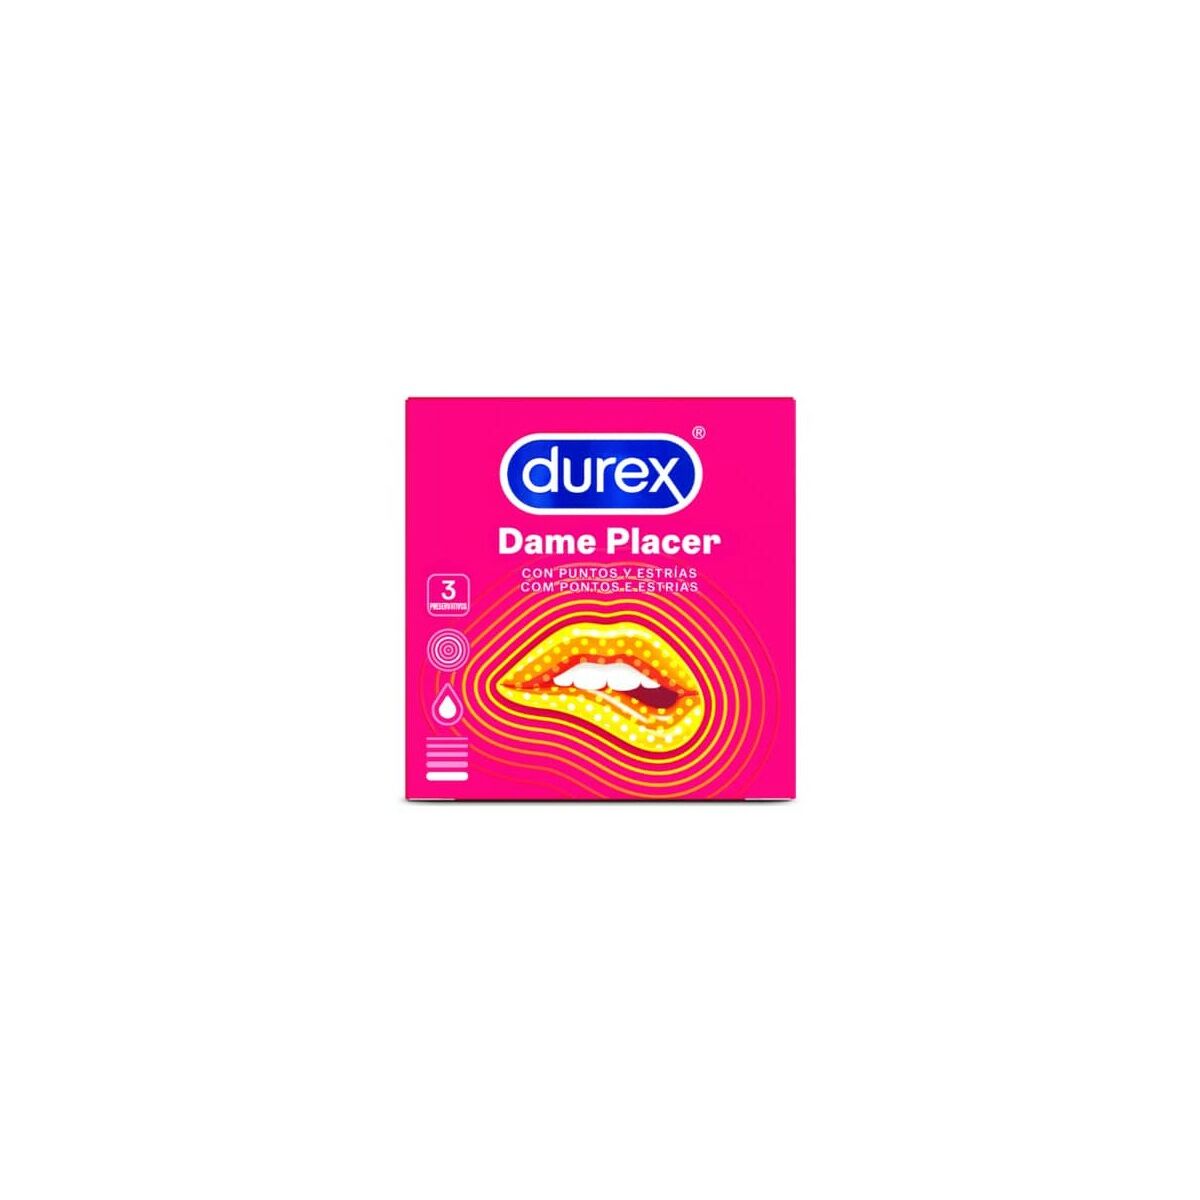 Prezervative Dame Placer Durex 3 uds